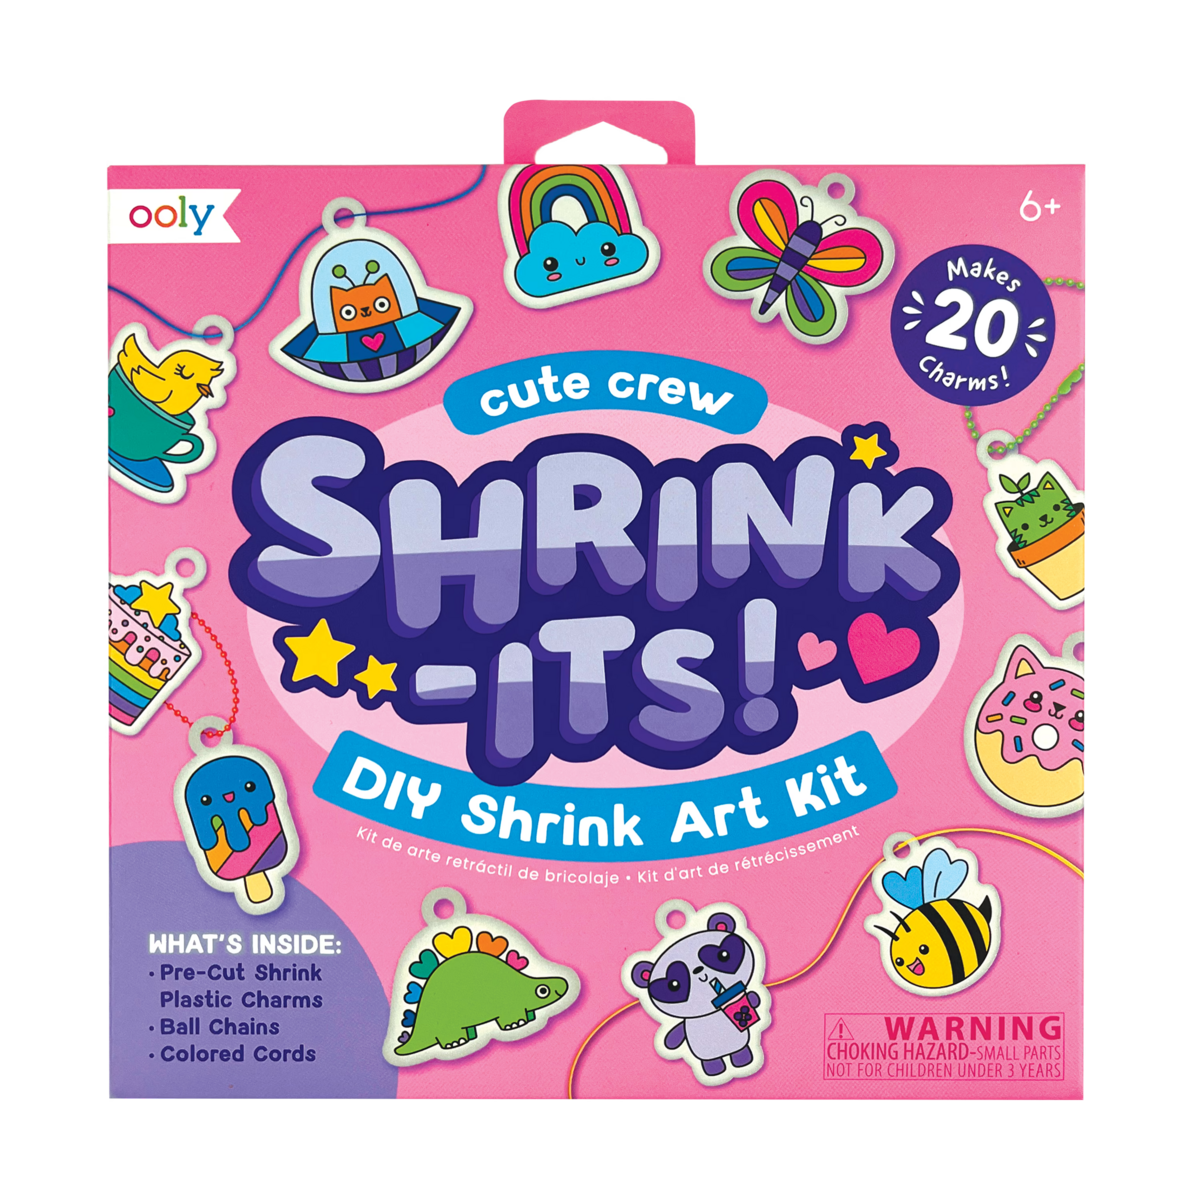 Razzle Dazzle D.I.Y. Mini Gem Art Kit - Bouncy Bunny – I Love Sweet Treatz